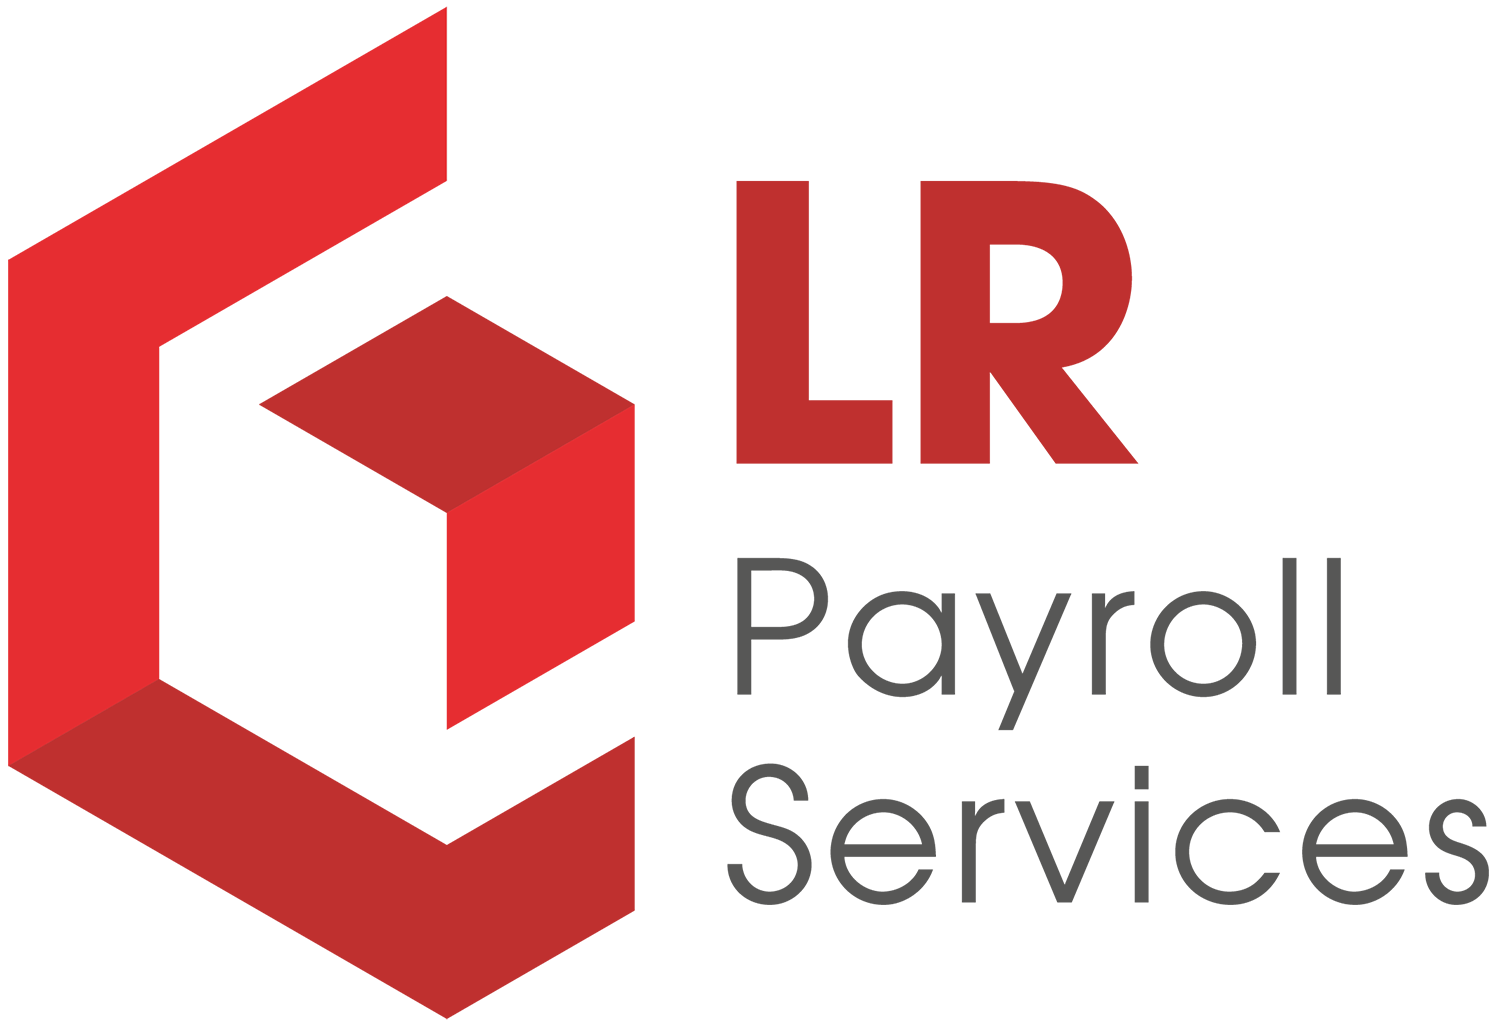 LR Payroll Services